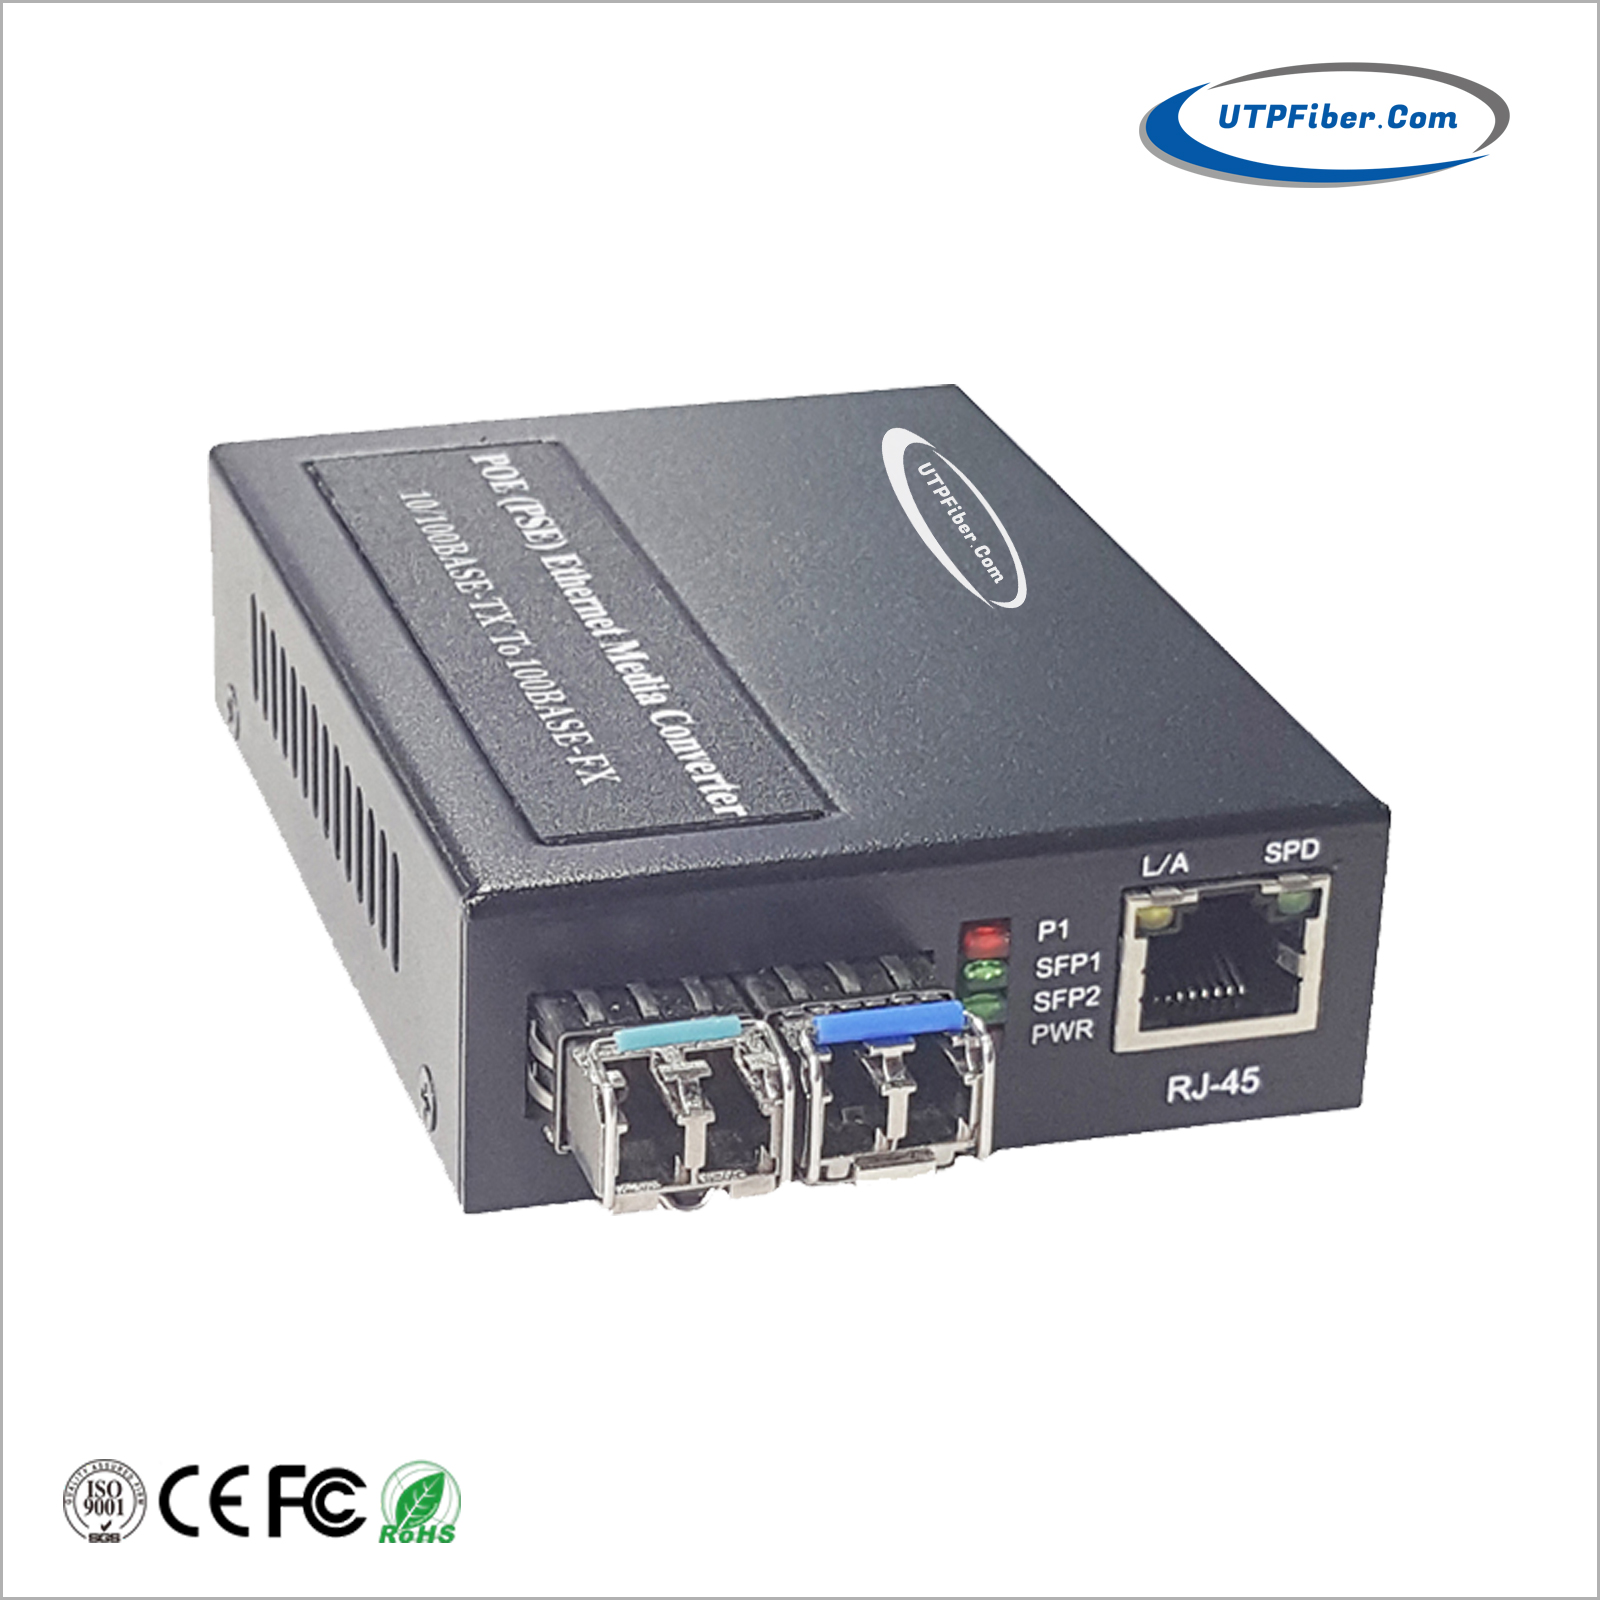 2-port 100Base-FX SFP to 1-port 10/100Base-TX 802.3at PoE+ Media Converter